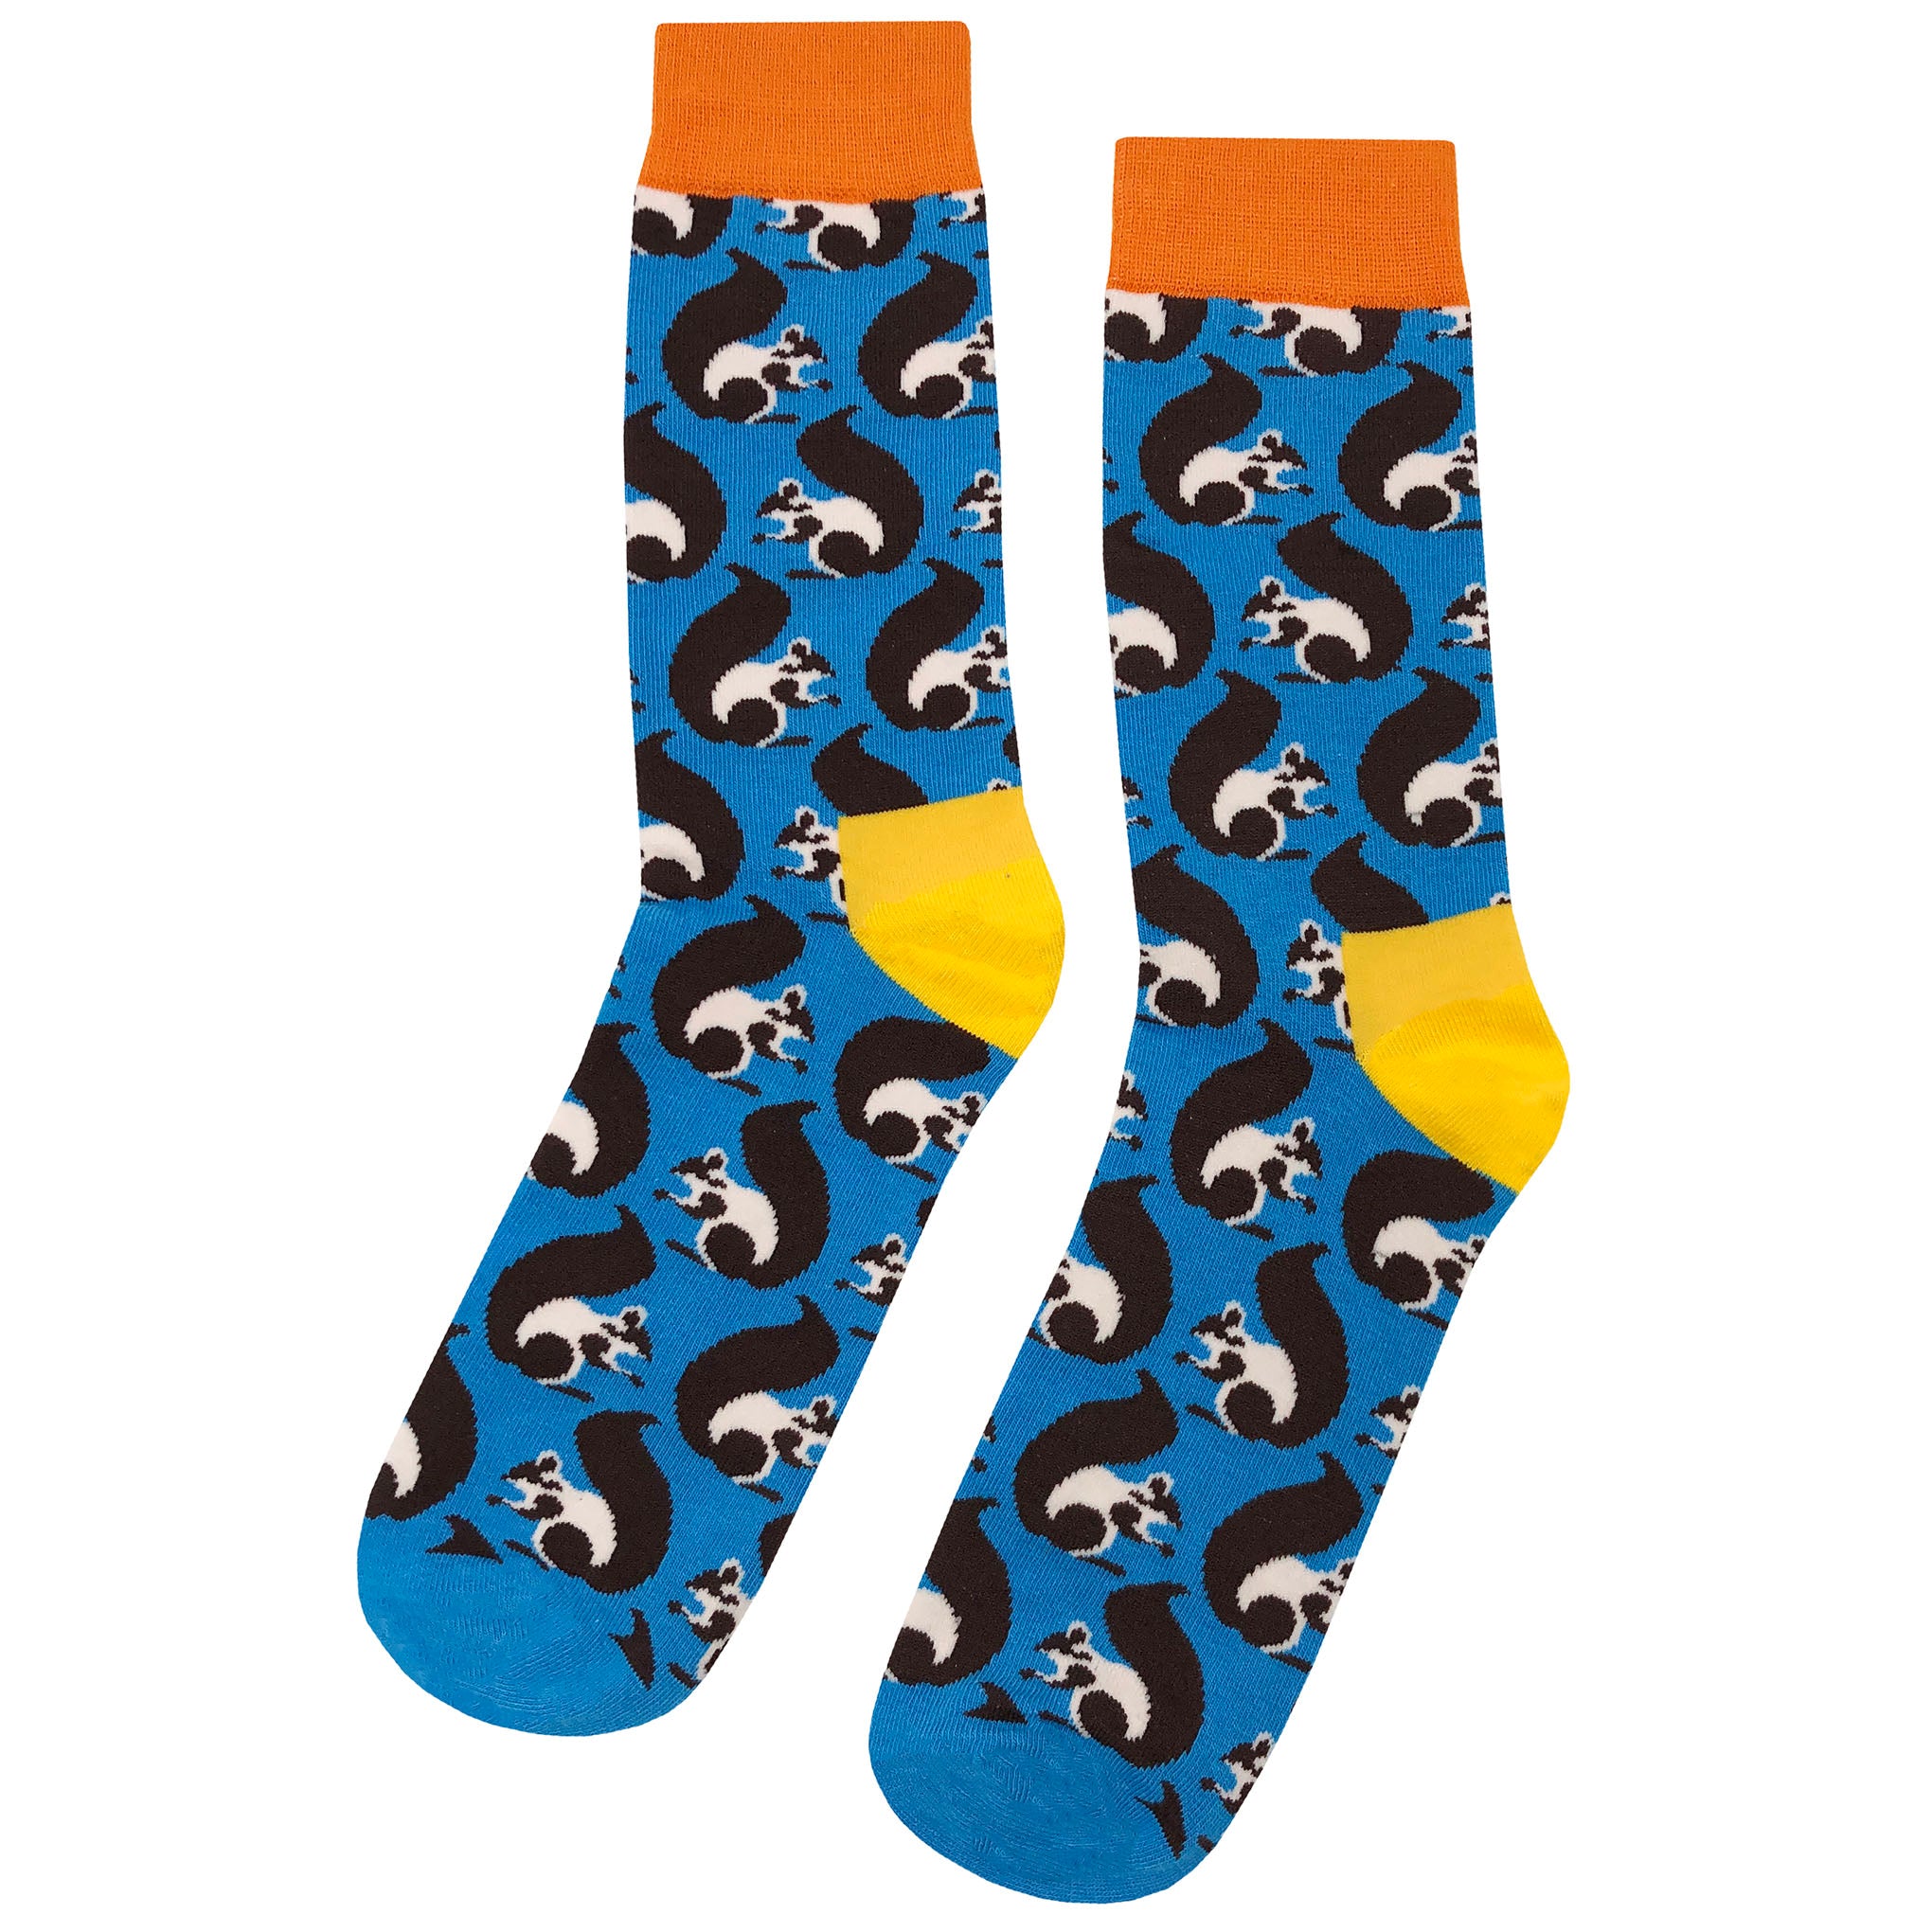 Furry Squirrel Socks - Fun and Crazy Socks at Sockfly.com